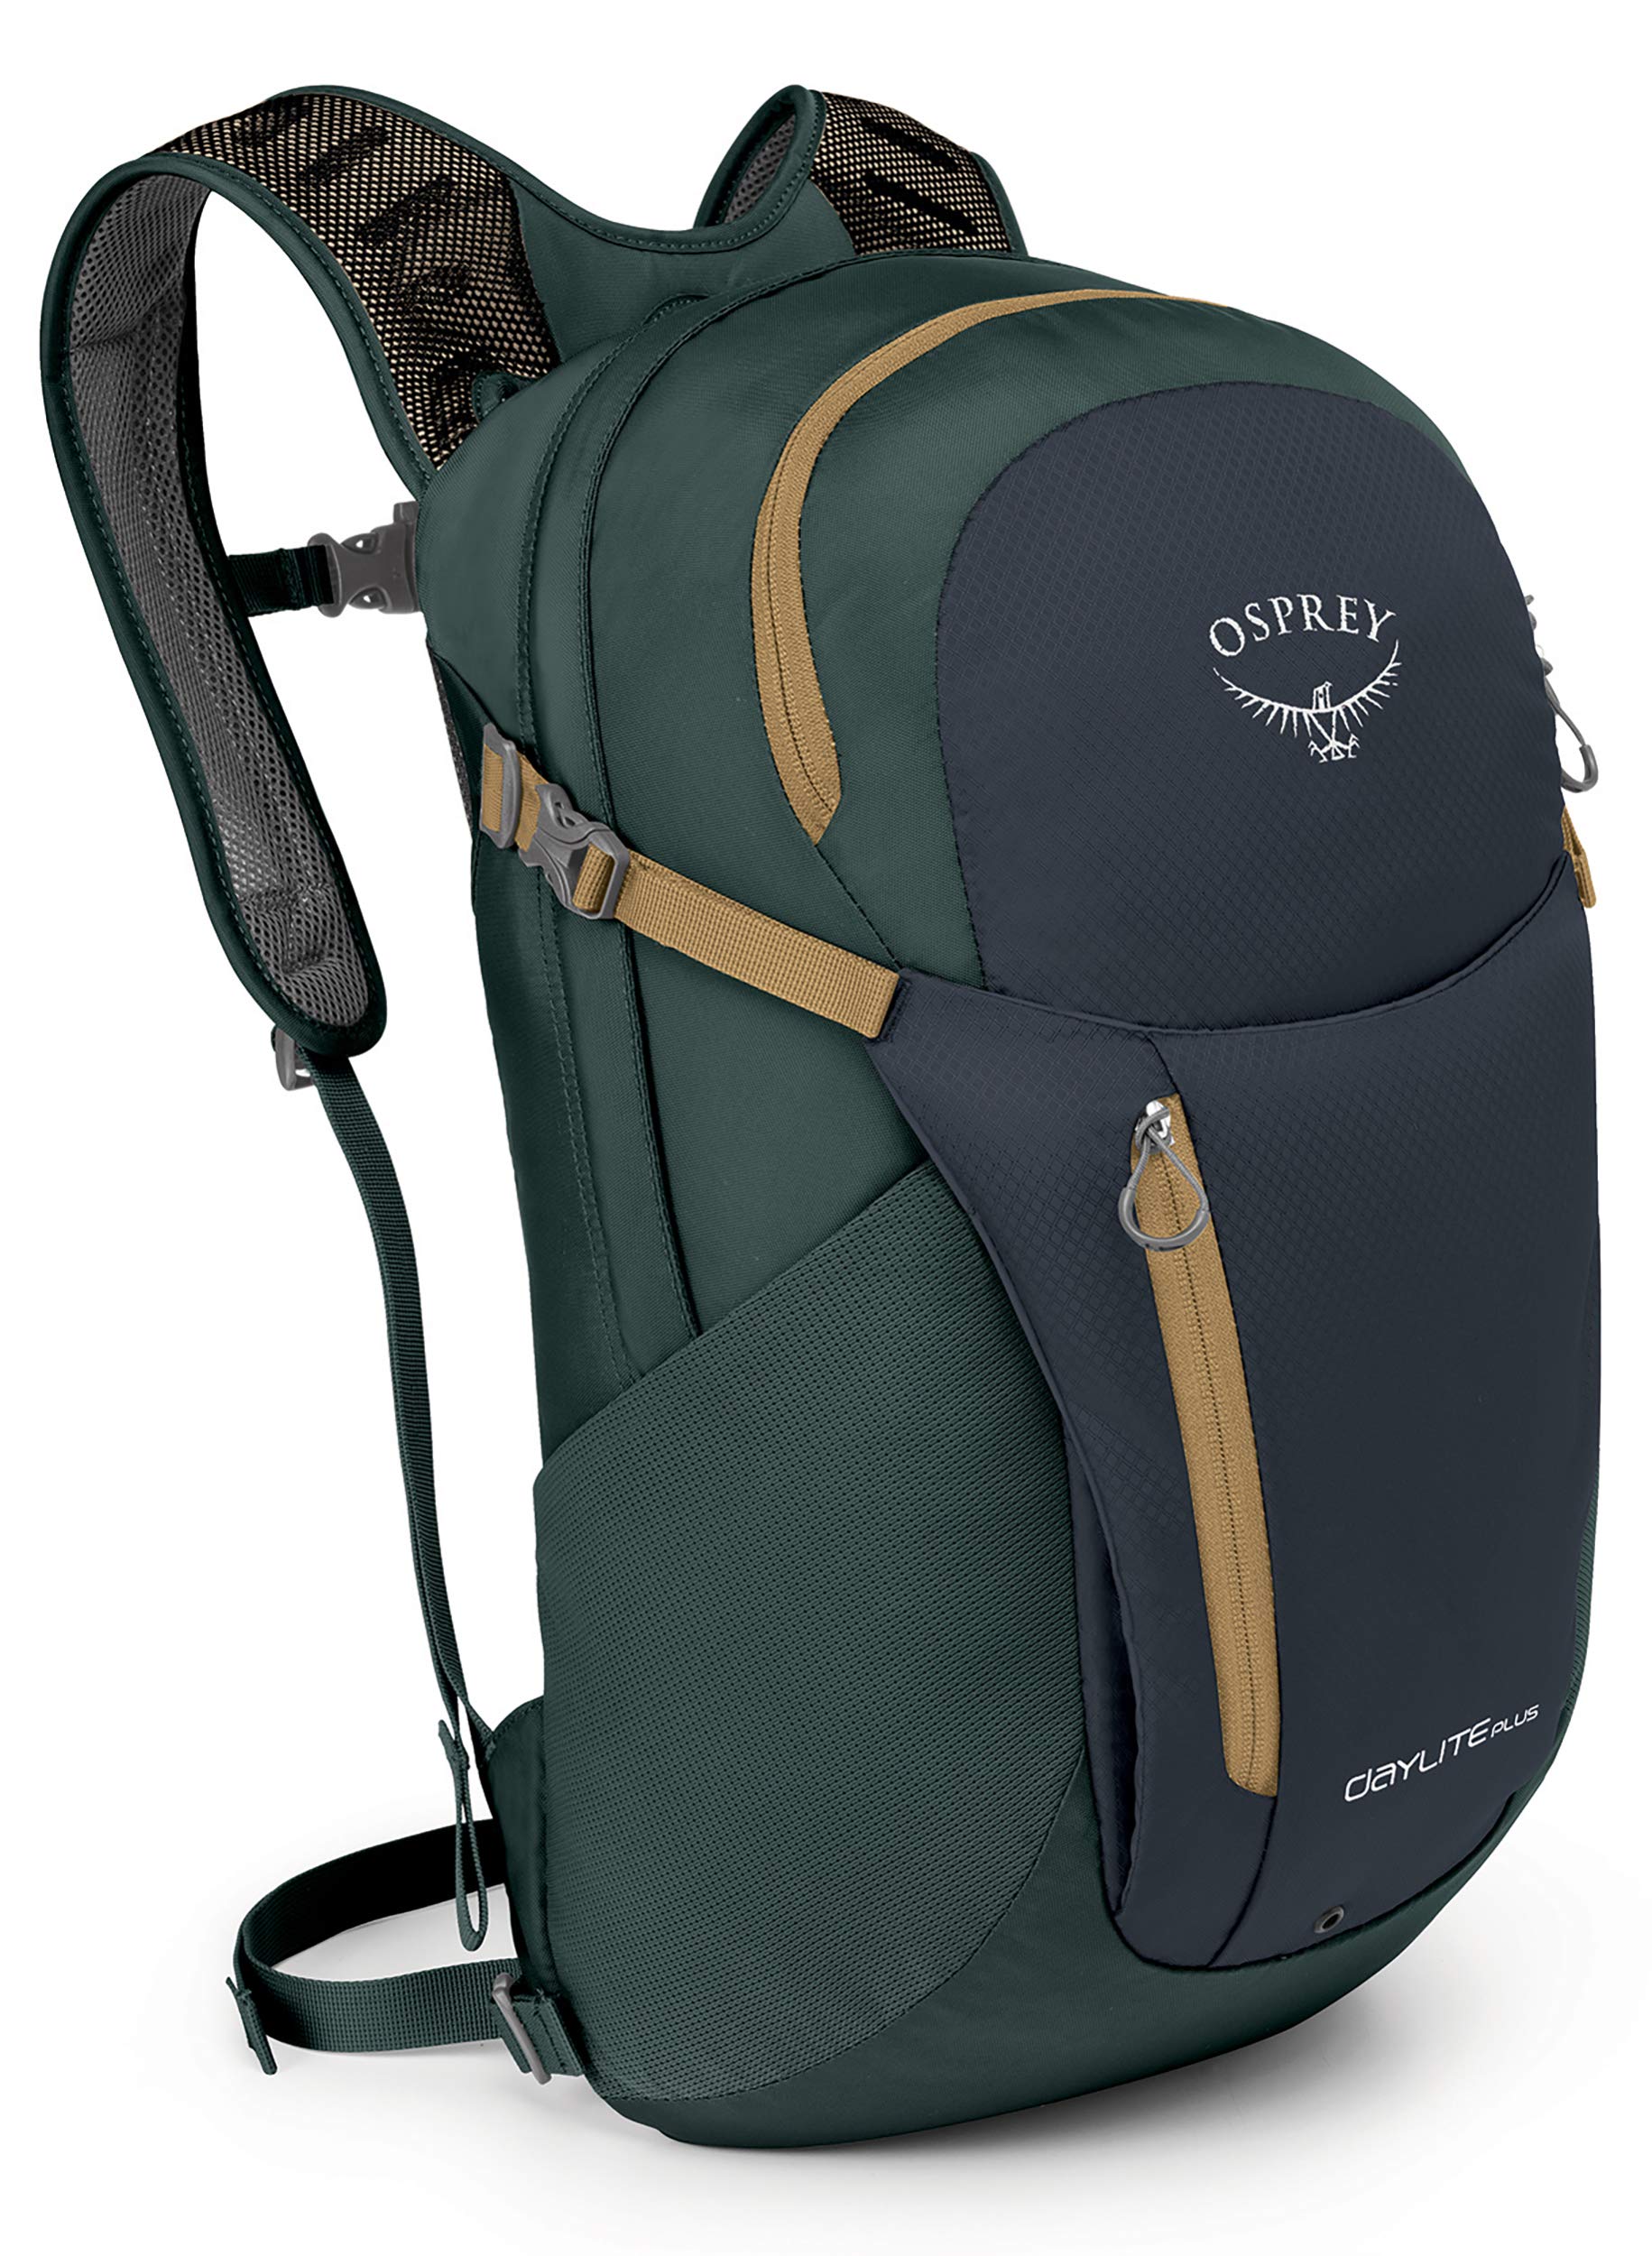 Osprey Daylite Plus Daypack Review